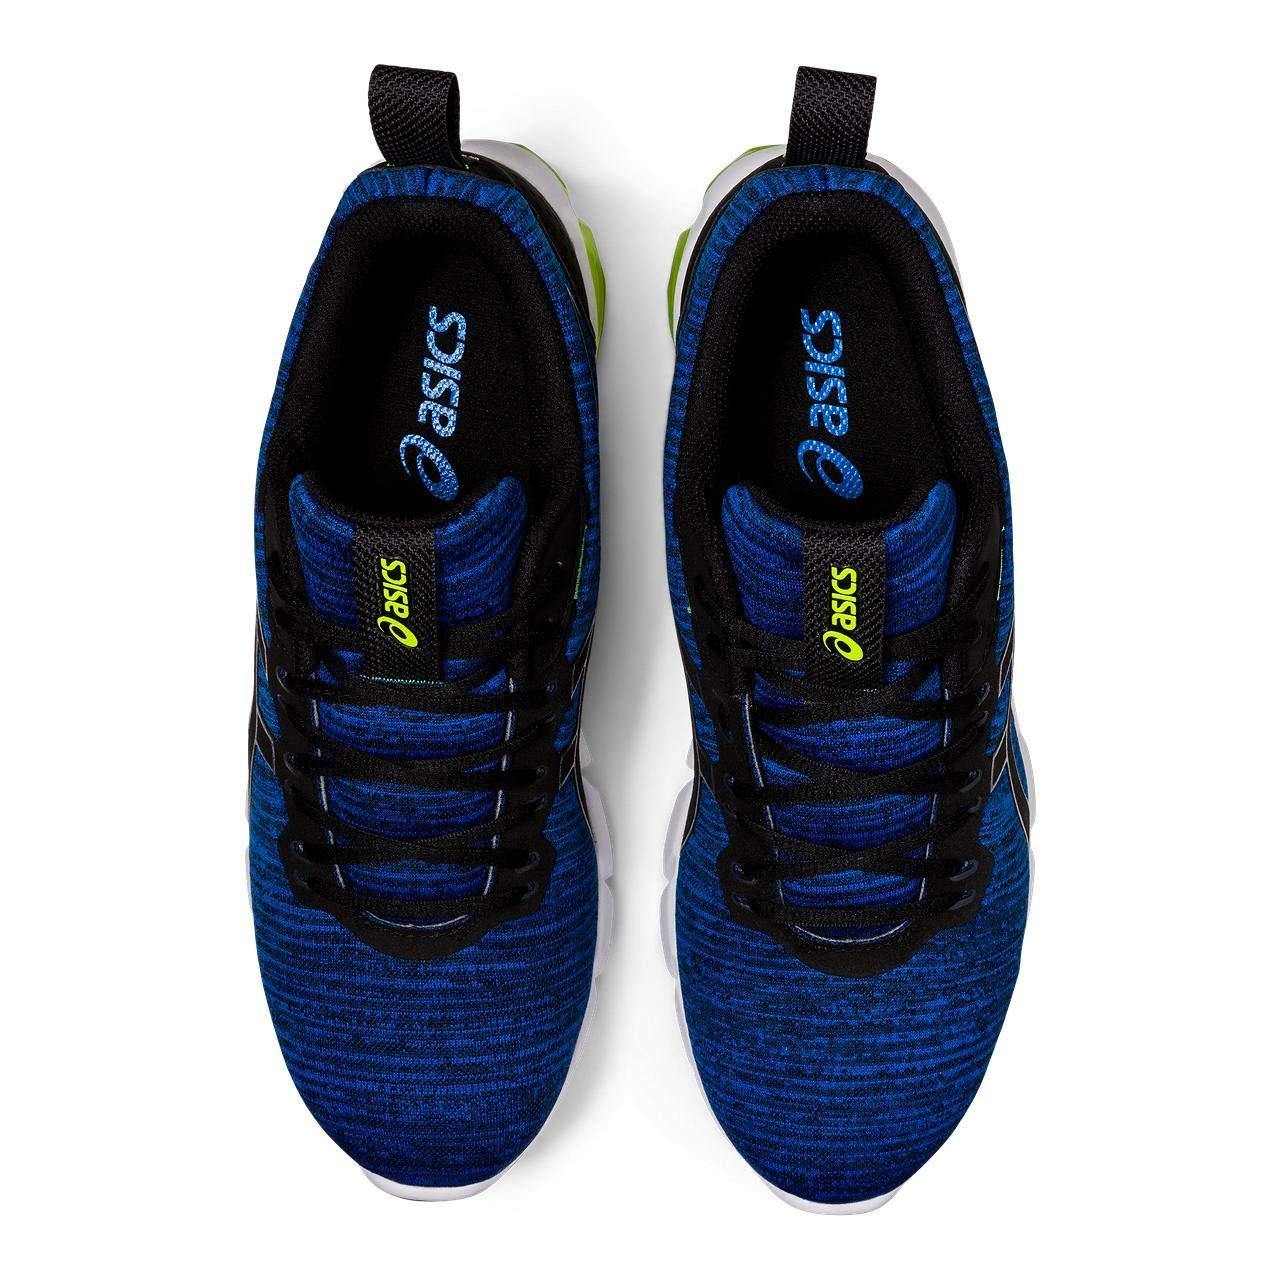 ASICS Men's Gel-Quantum 90 2 Street Sneakers Tuna Blue/Safety Yellow - Best Price online Prokicksports.com